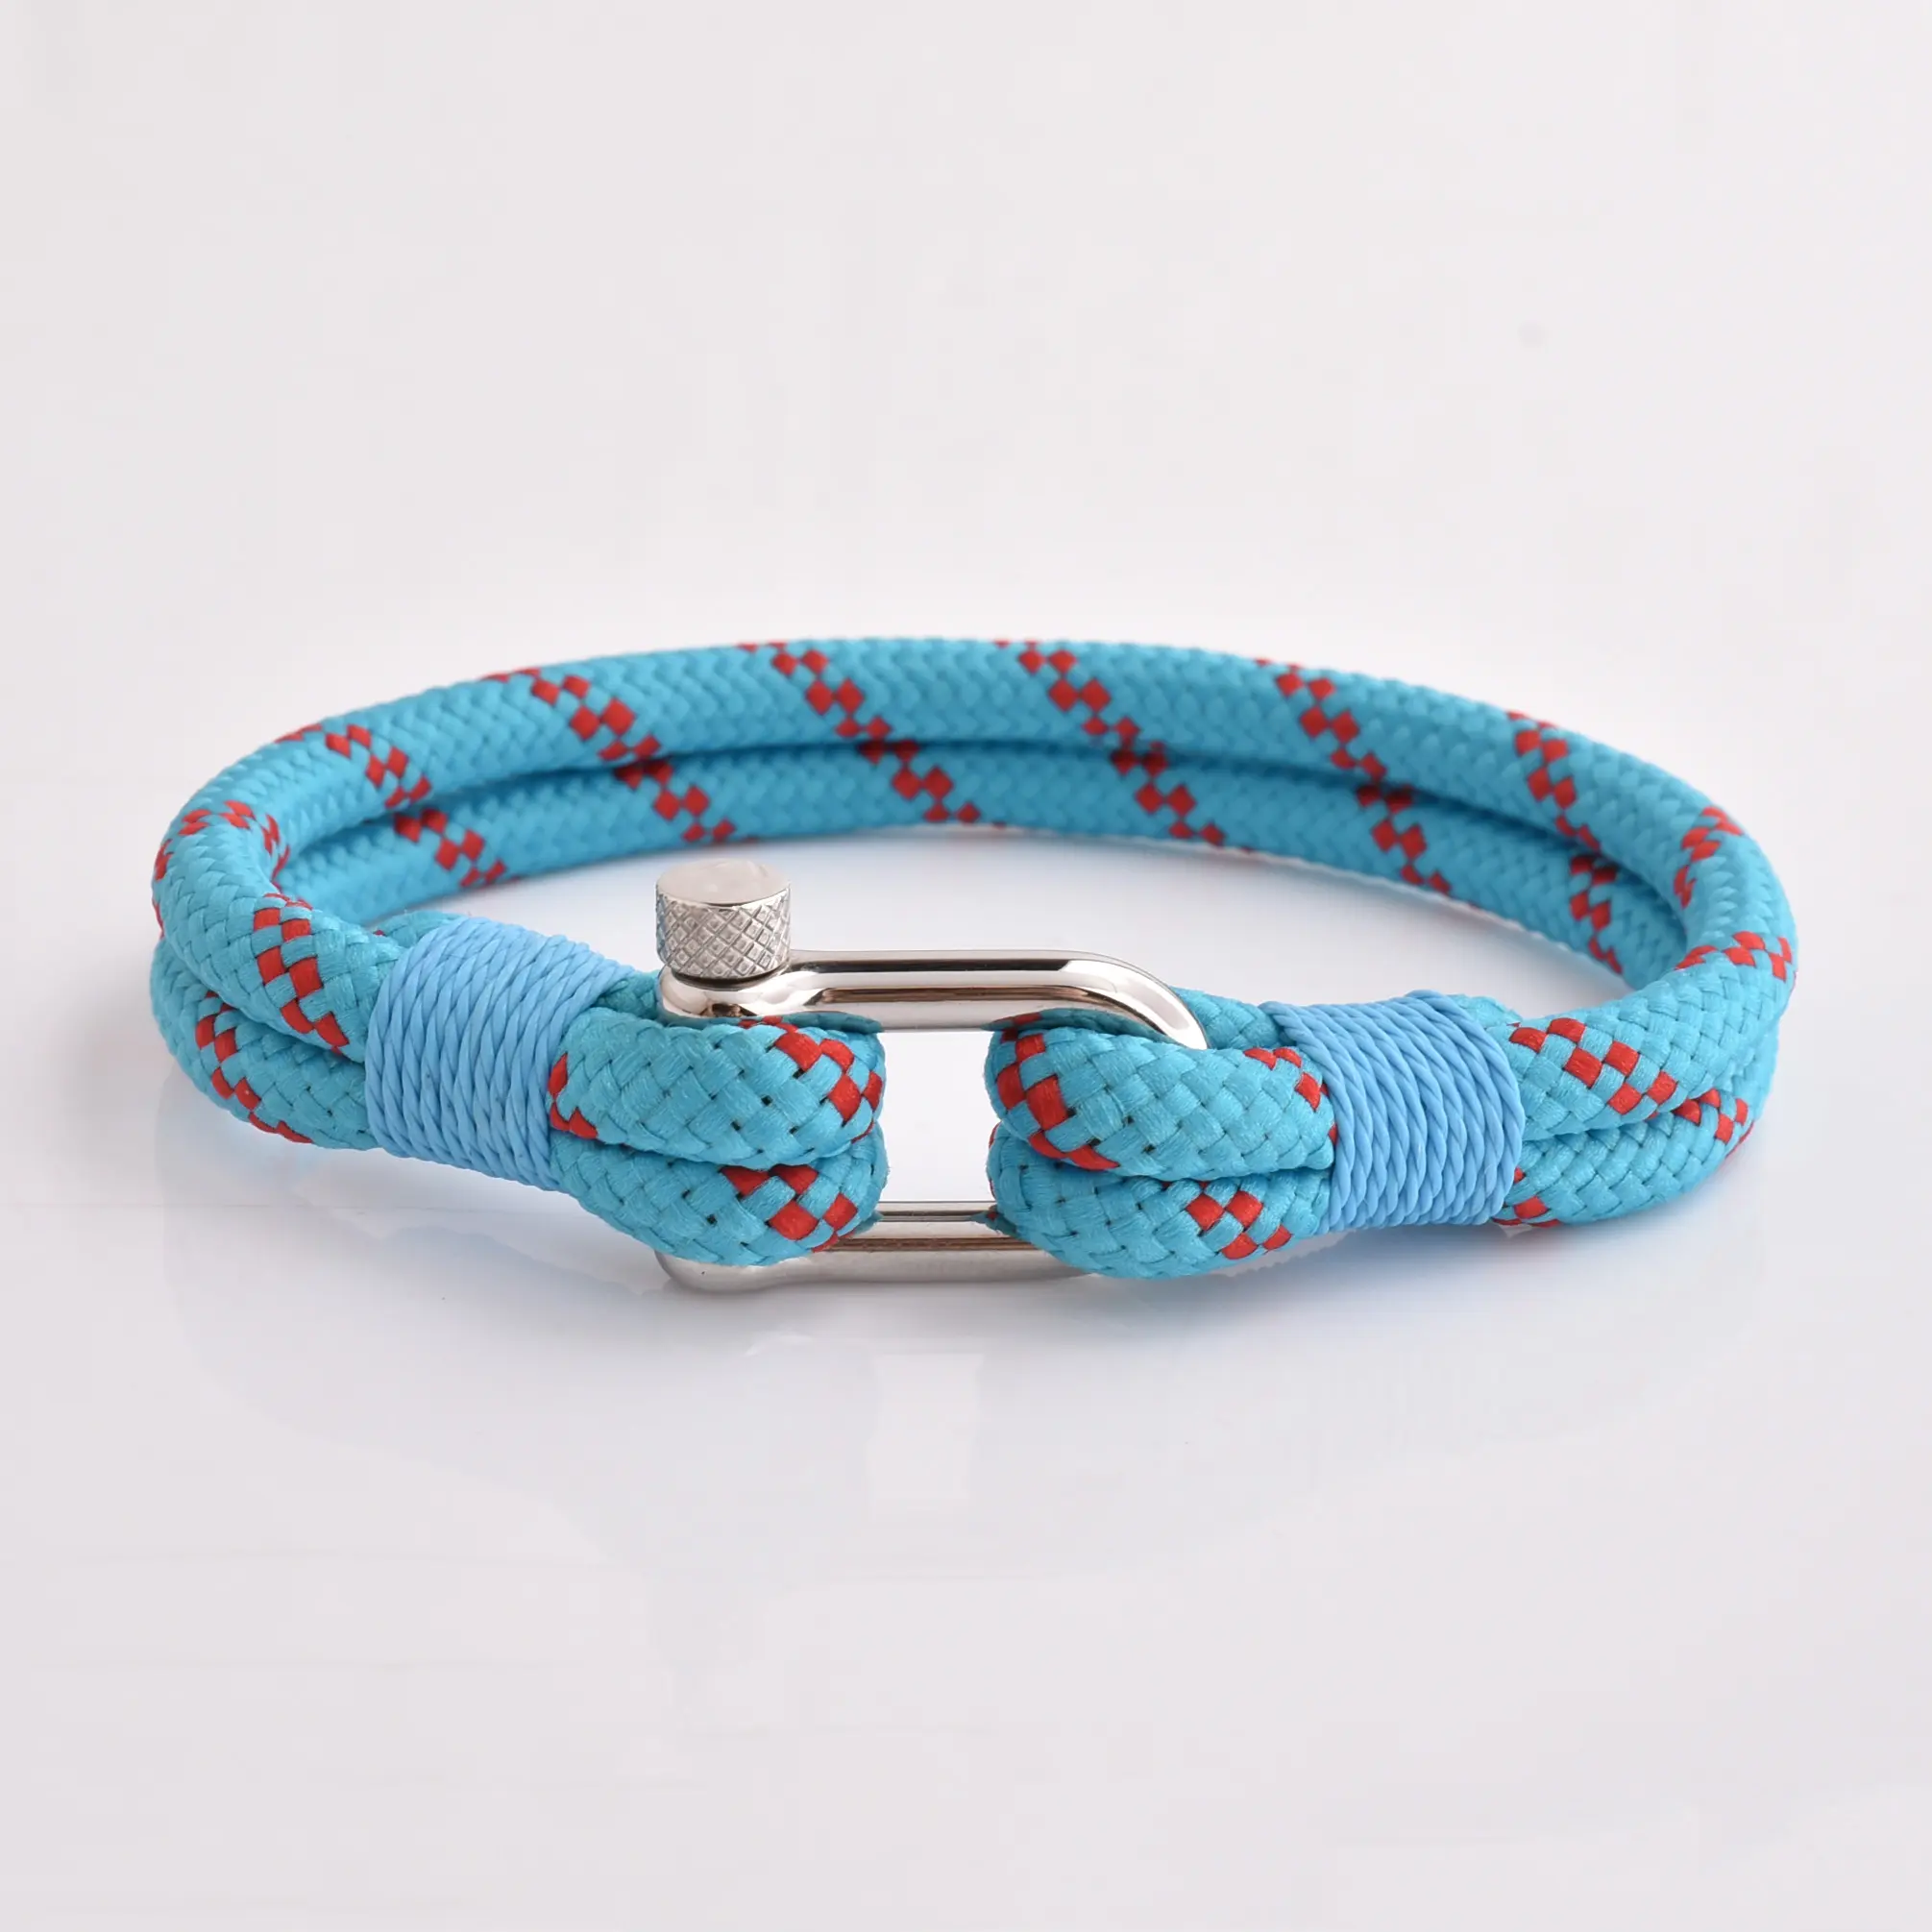 Fashon pulseira nova joia verão azul praia homem pulseira de nylon corda design pulseira